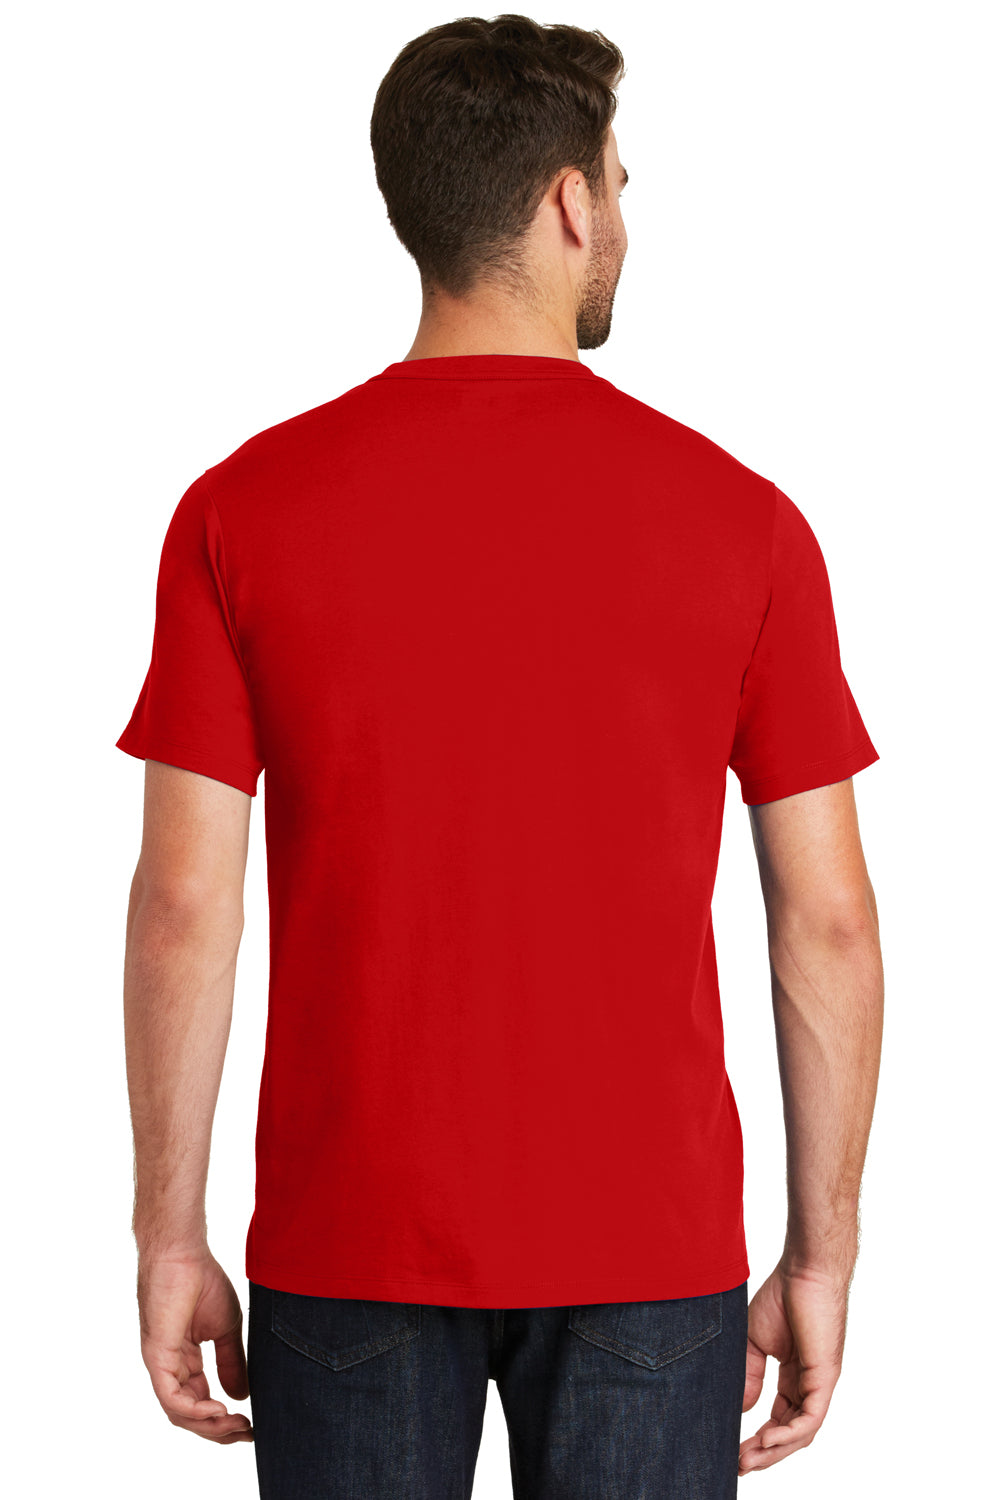 New Era NEA100 Mens Heritage Short Sleeve Crewneck T-Shirt Red Back